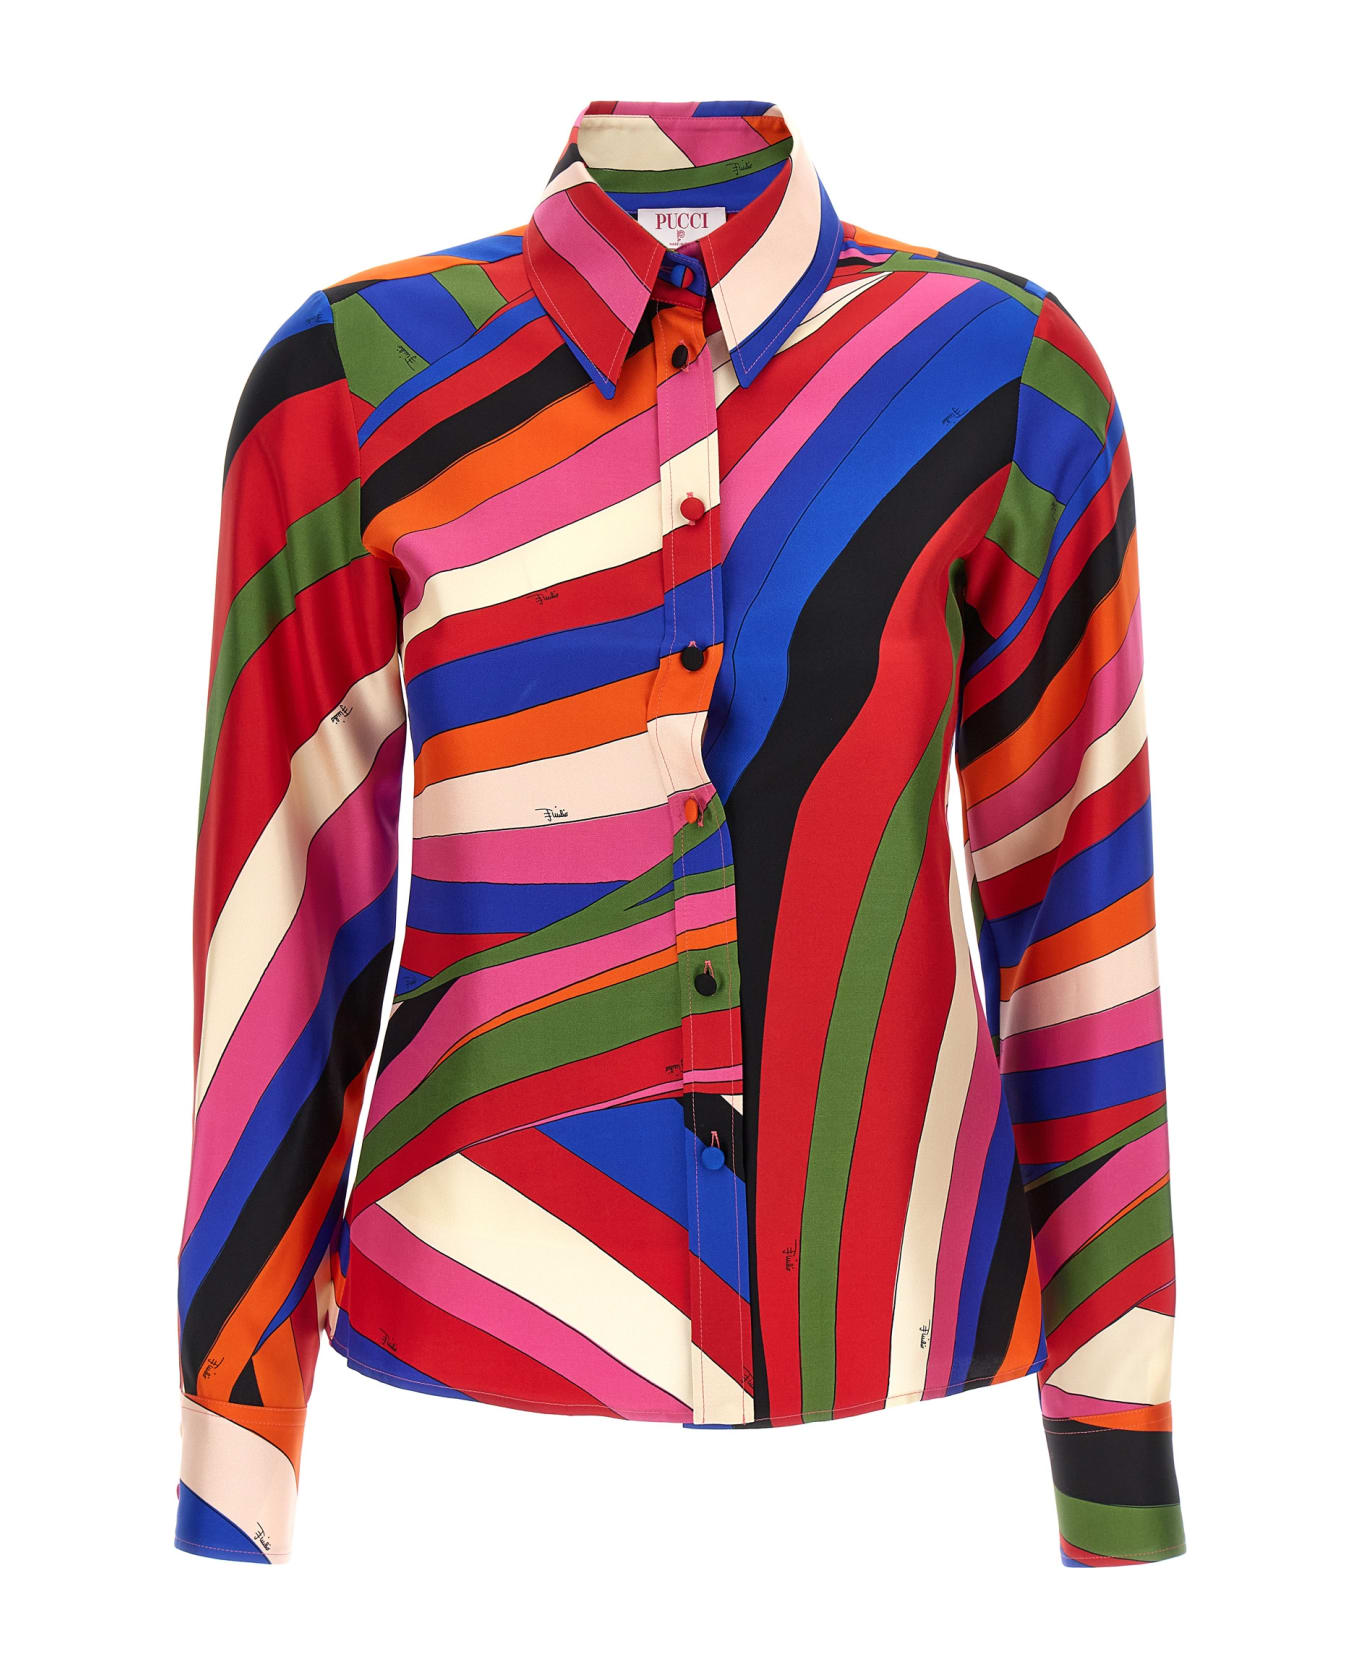 Pucci 'silk Twill' Shirt - MultiColour